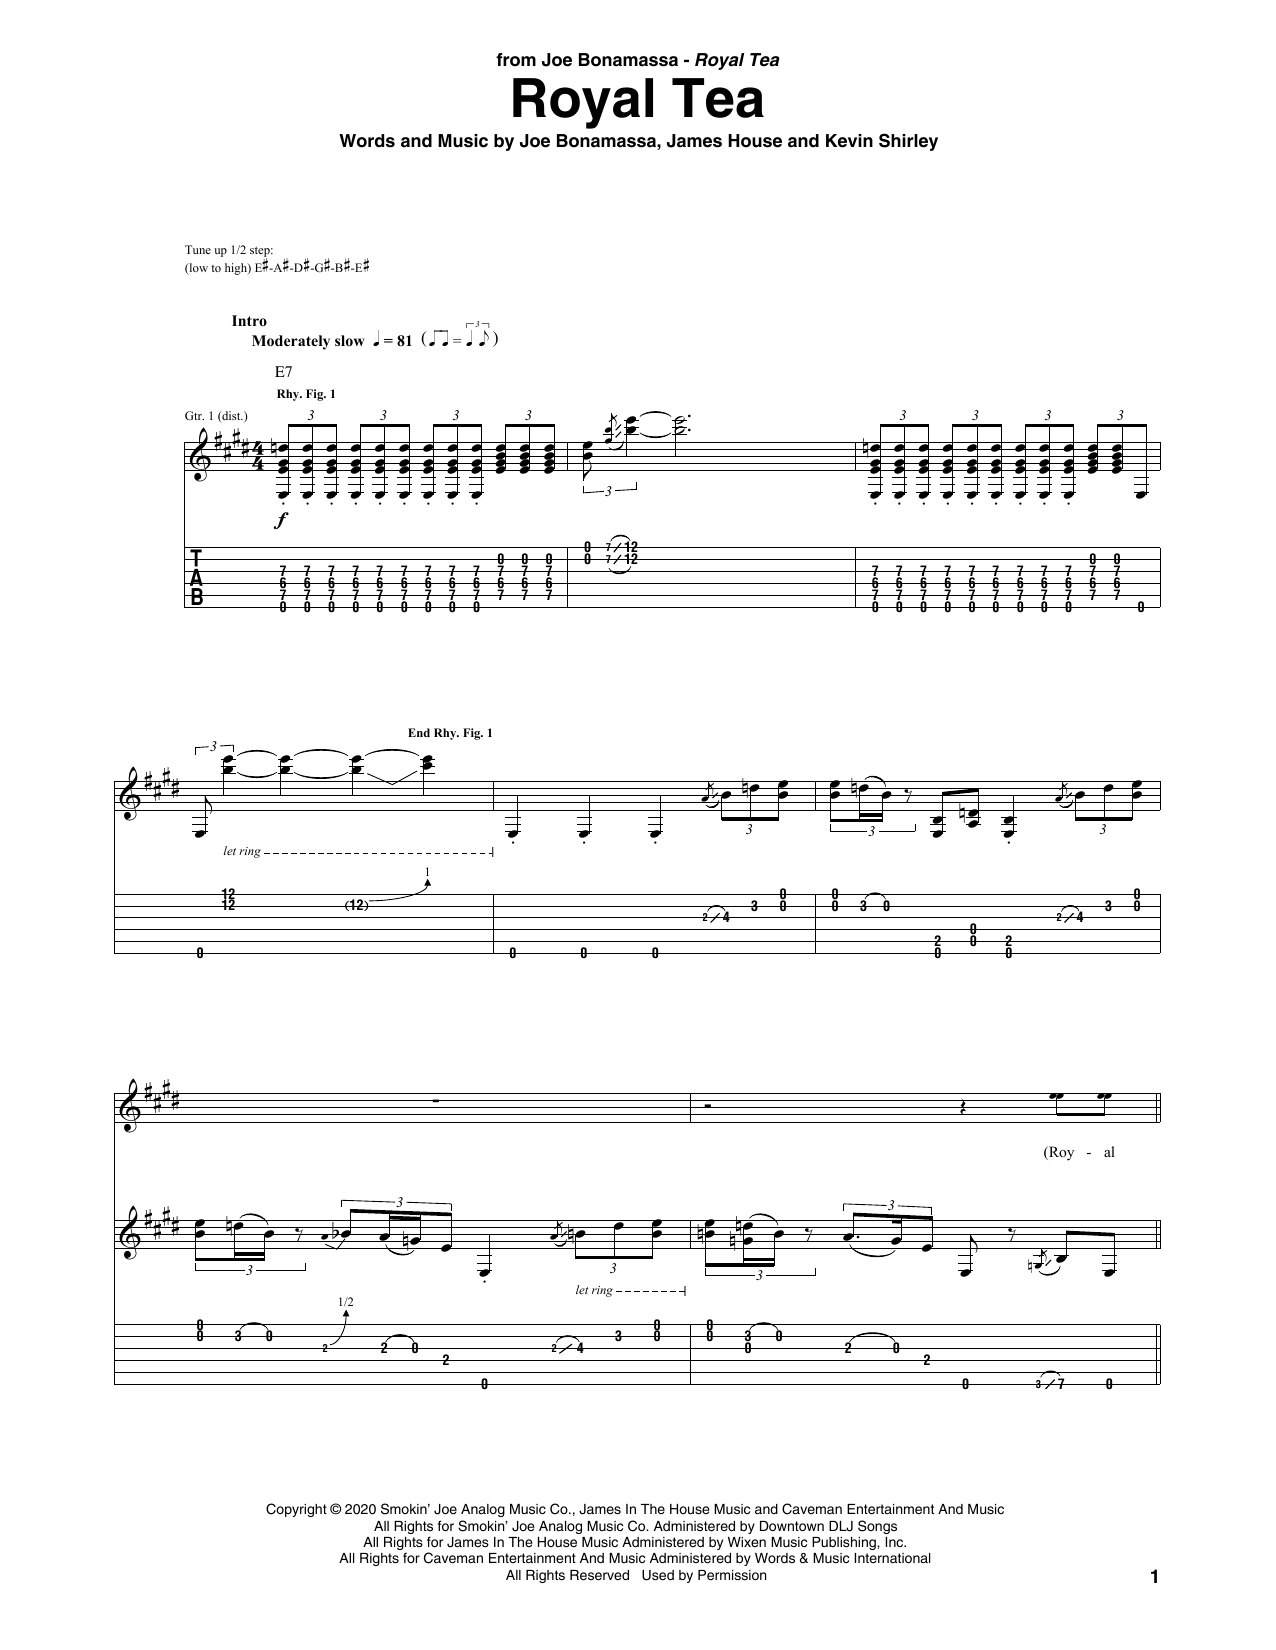 Download Joe Bonamassa Royal Tea Sheet Music and learn how to play Guitar Tab PDF digital score in minutes